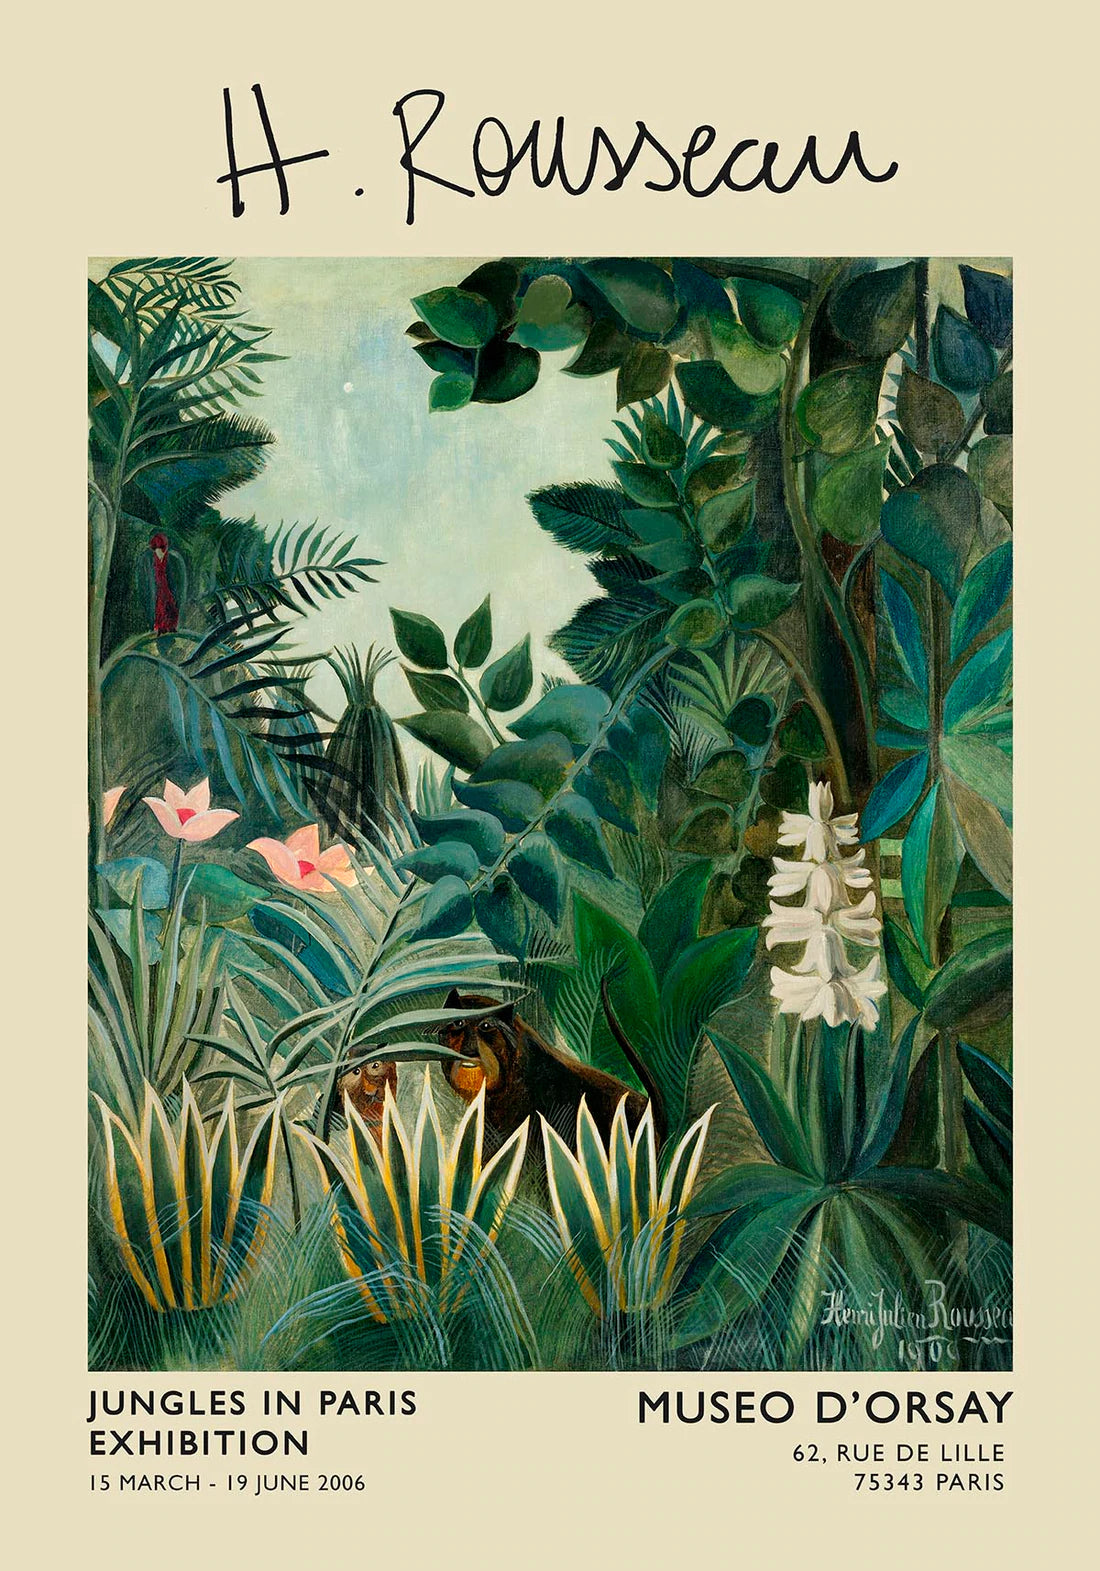 The Equatorial Jungle by Henri Rousseau Art Exhibition poster.